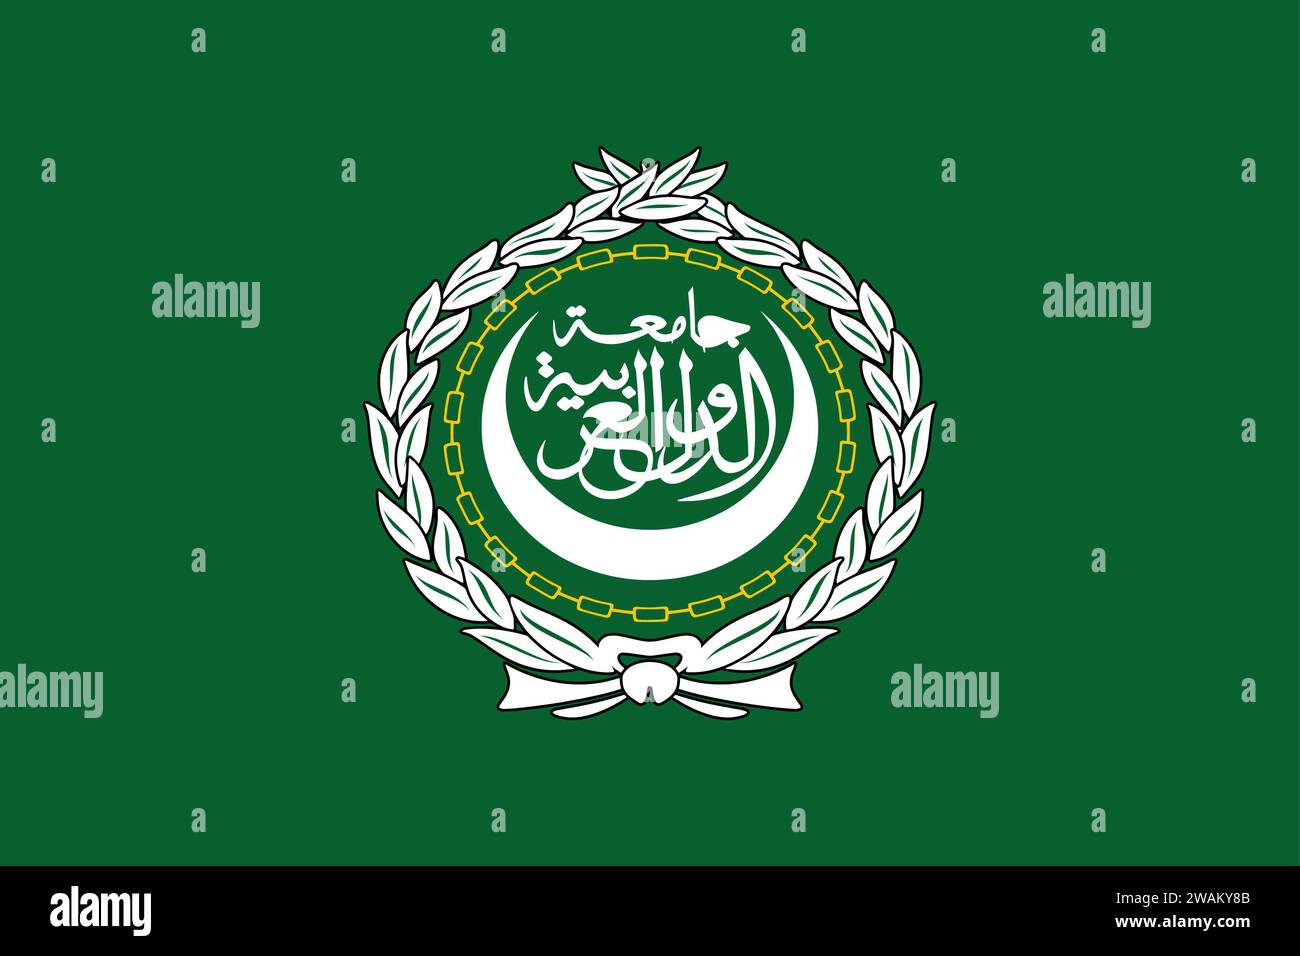 High detailed flag of Arab League. National Arab League flag. Asia. 3D illustration. Stock Photo